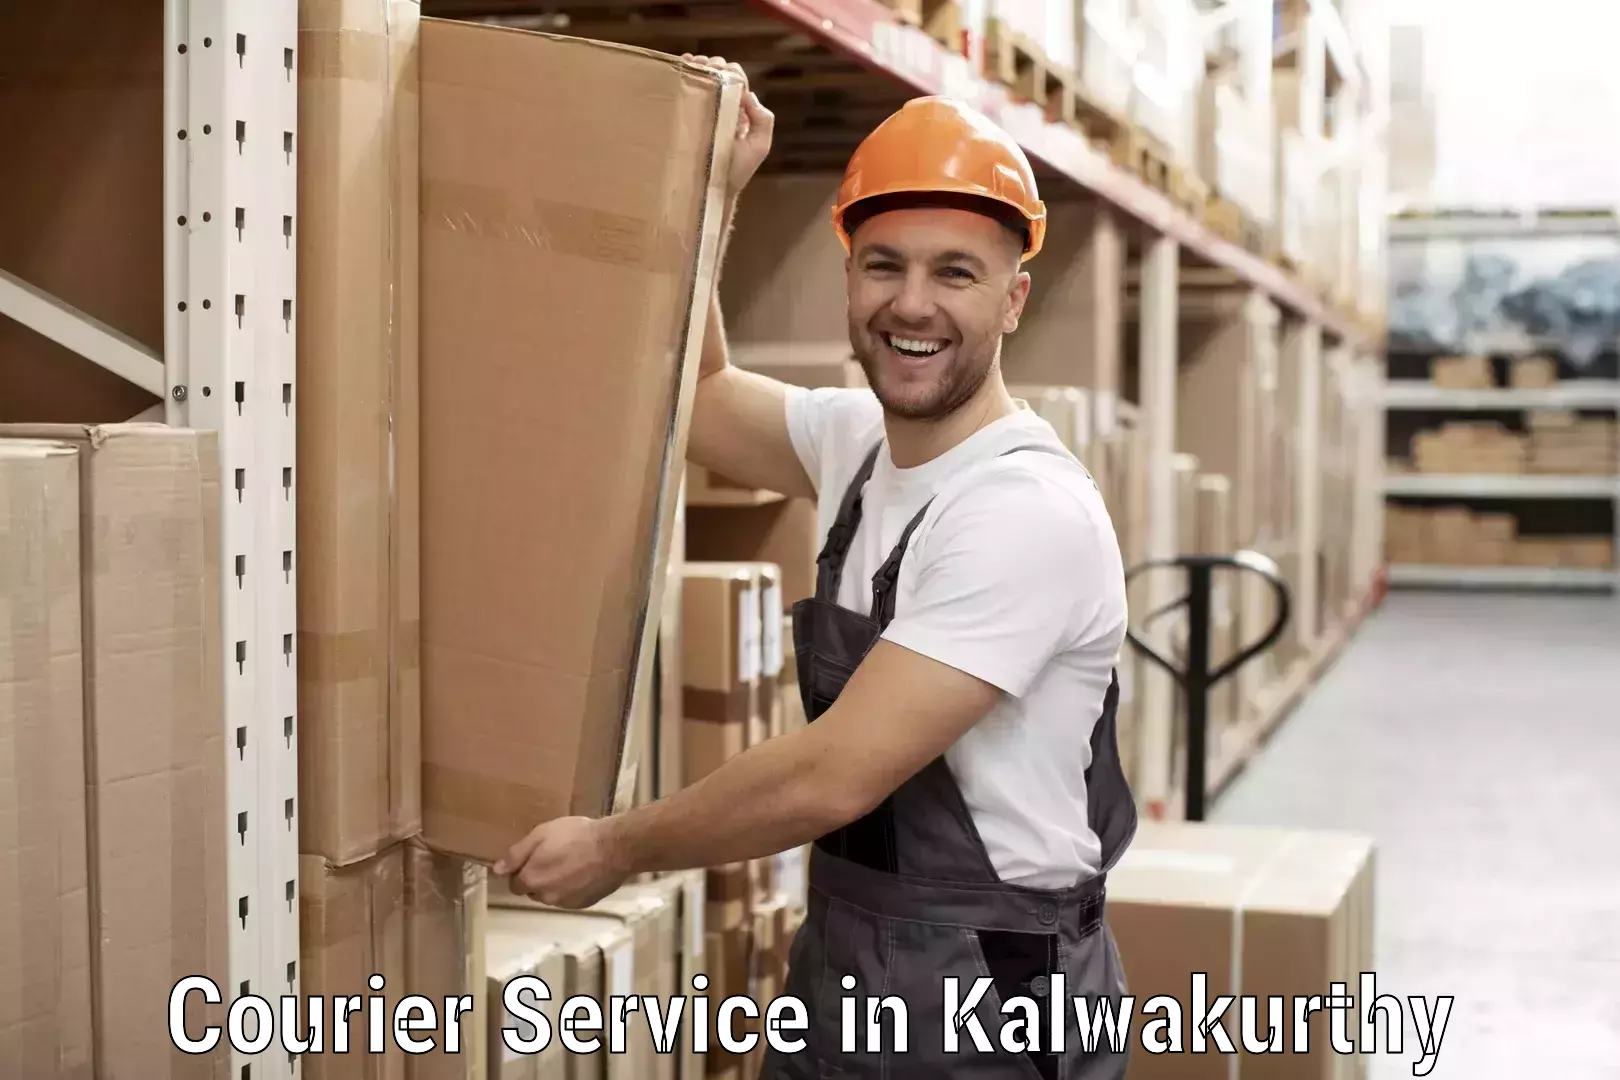 Quick dispatch service in Kalwakurthy